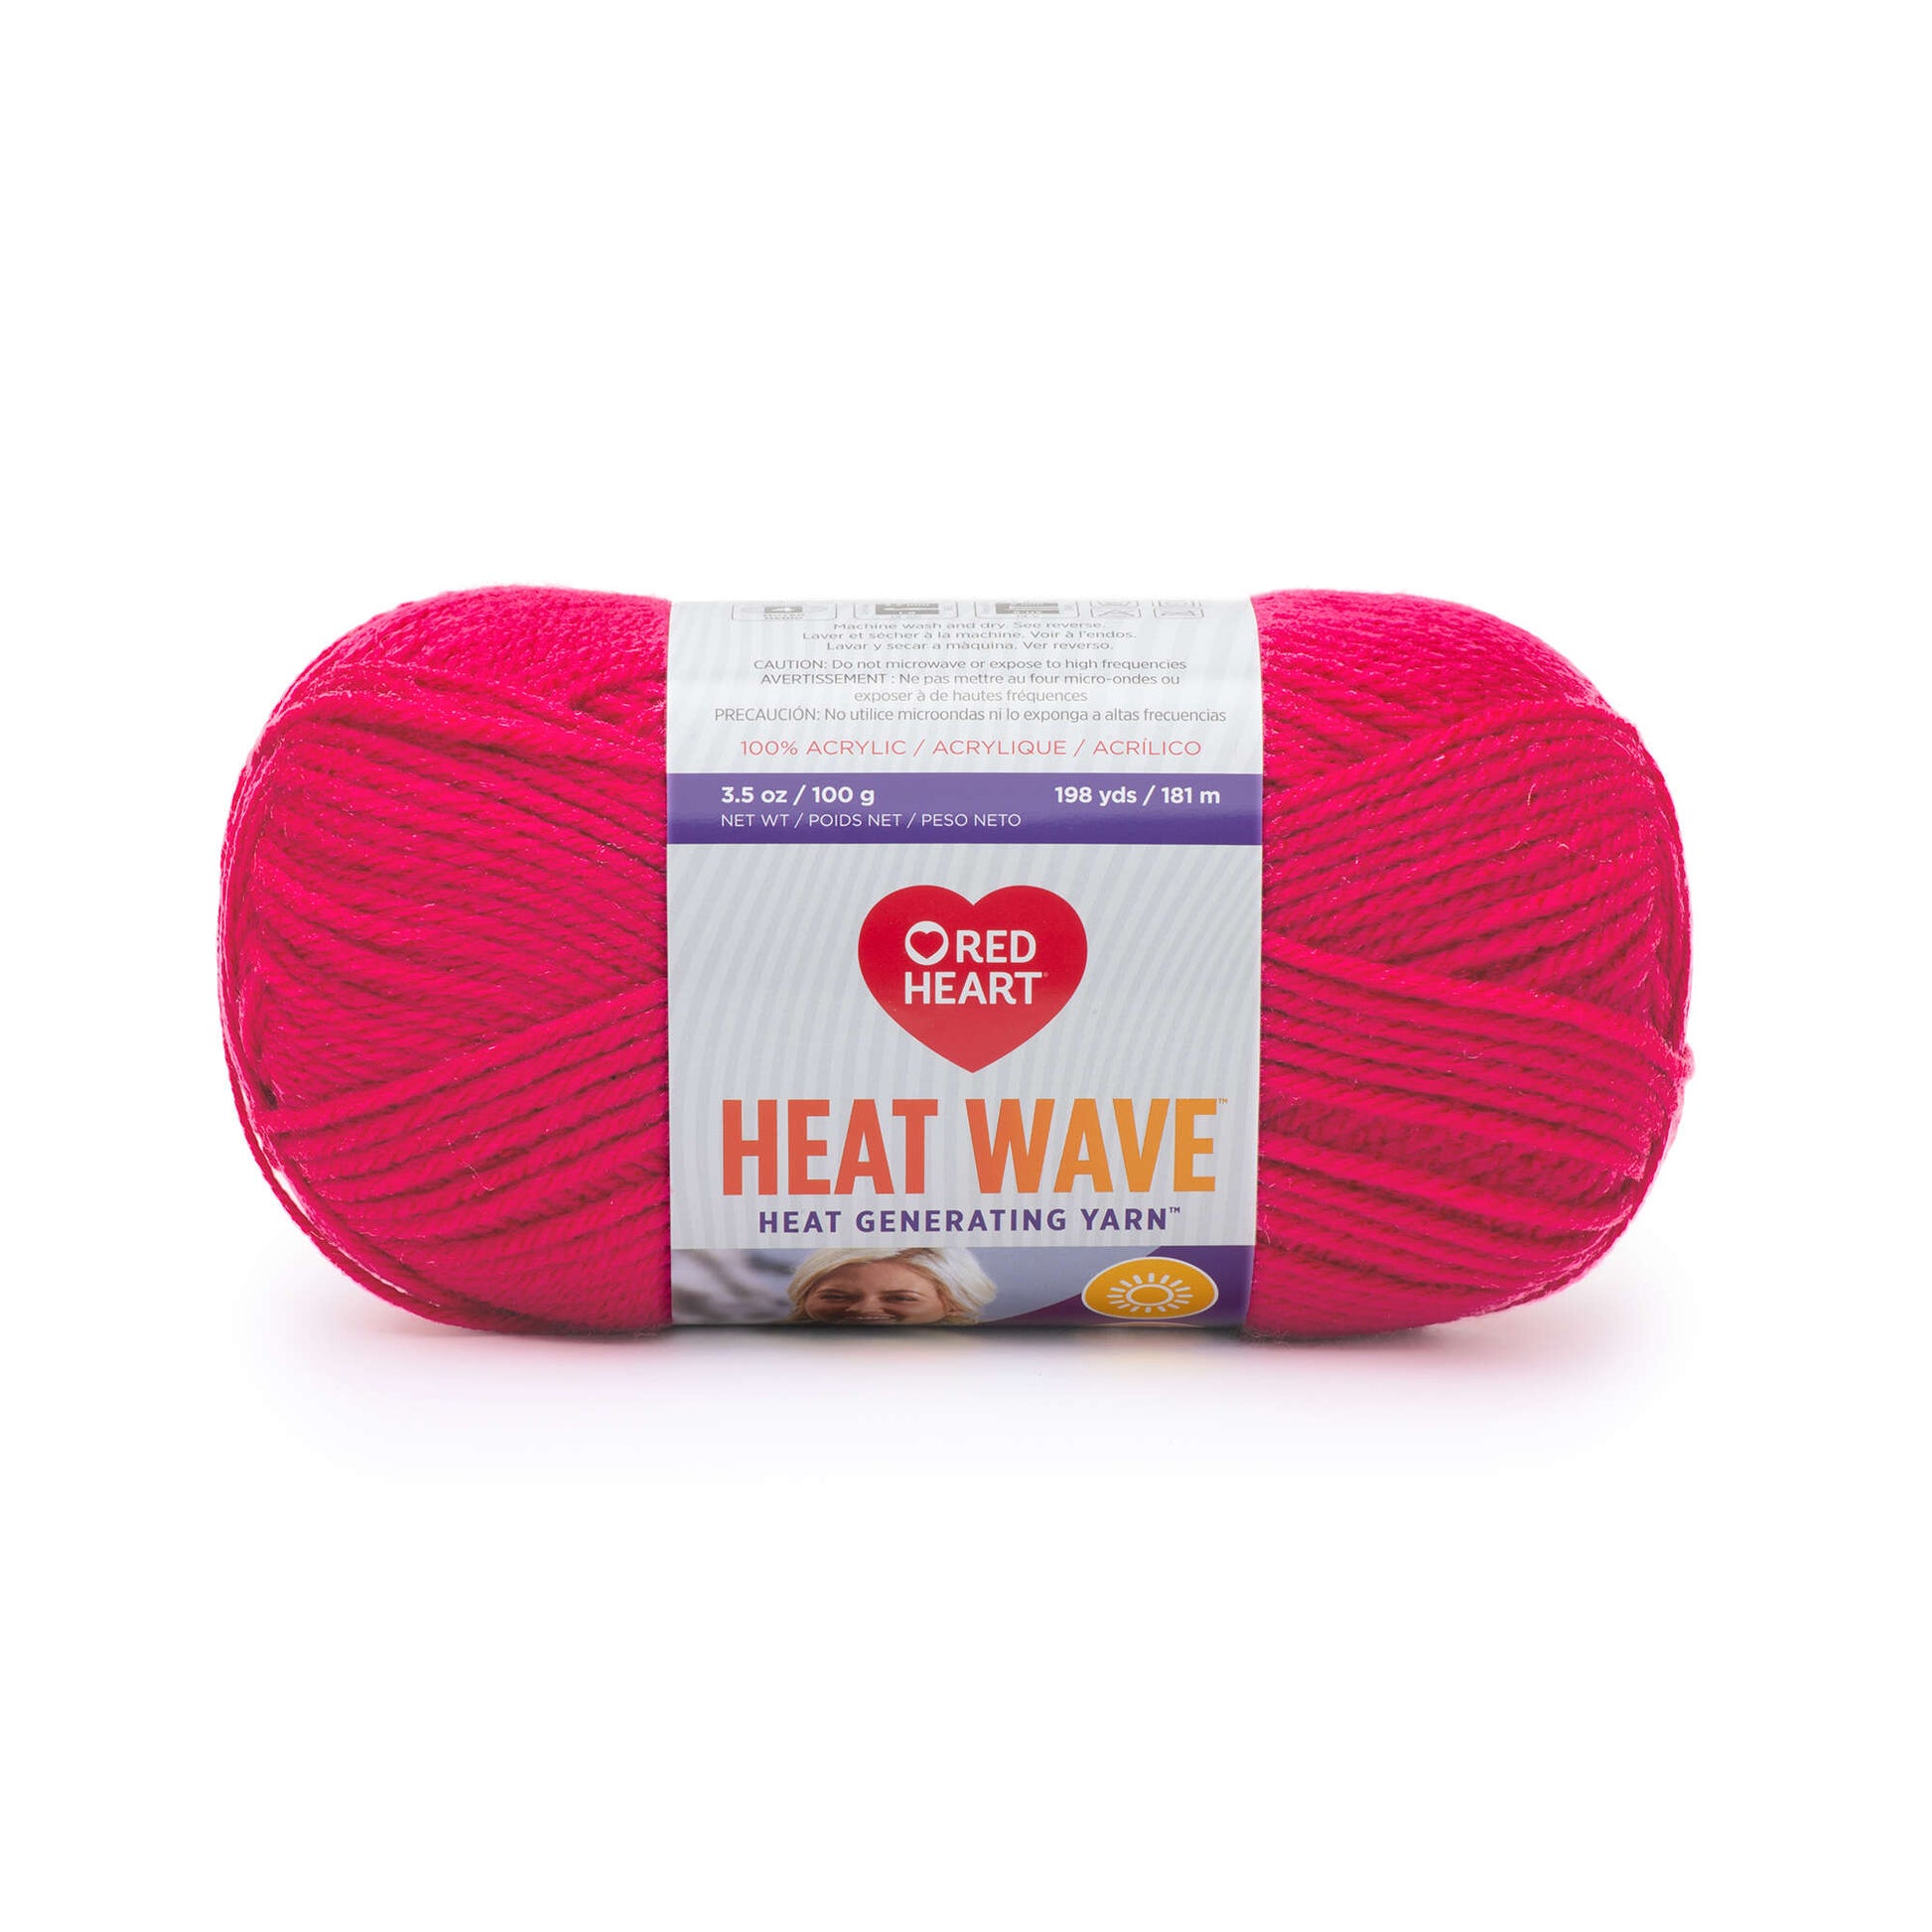 Red Heart Heat Wave Yarn - Discontinued shades Bikini